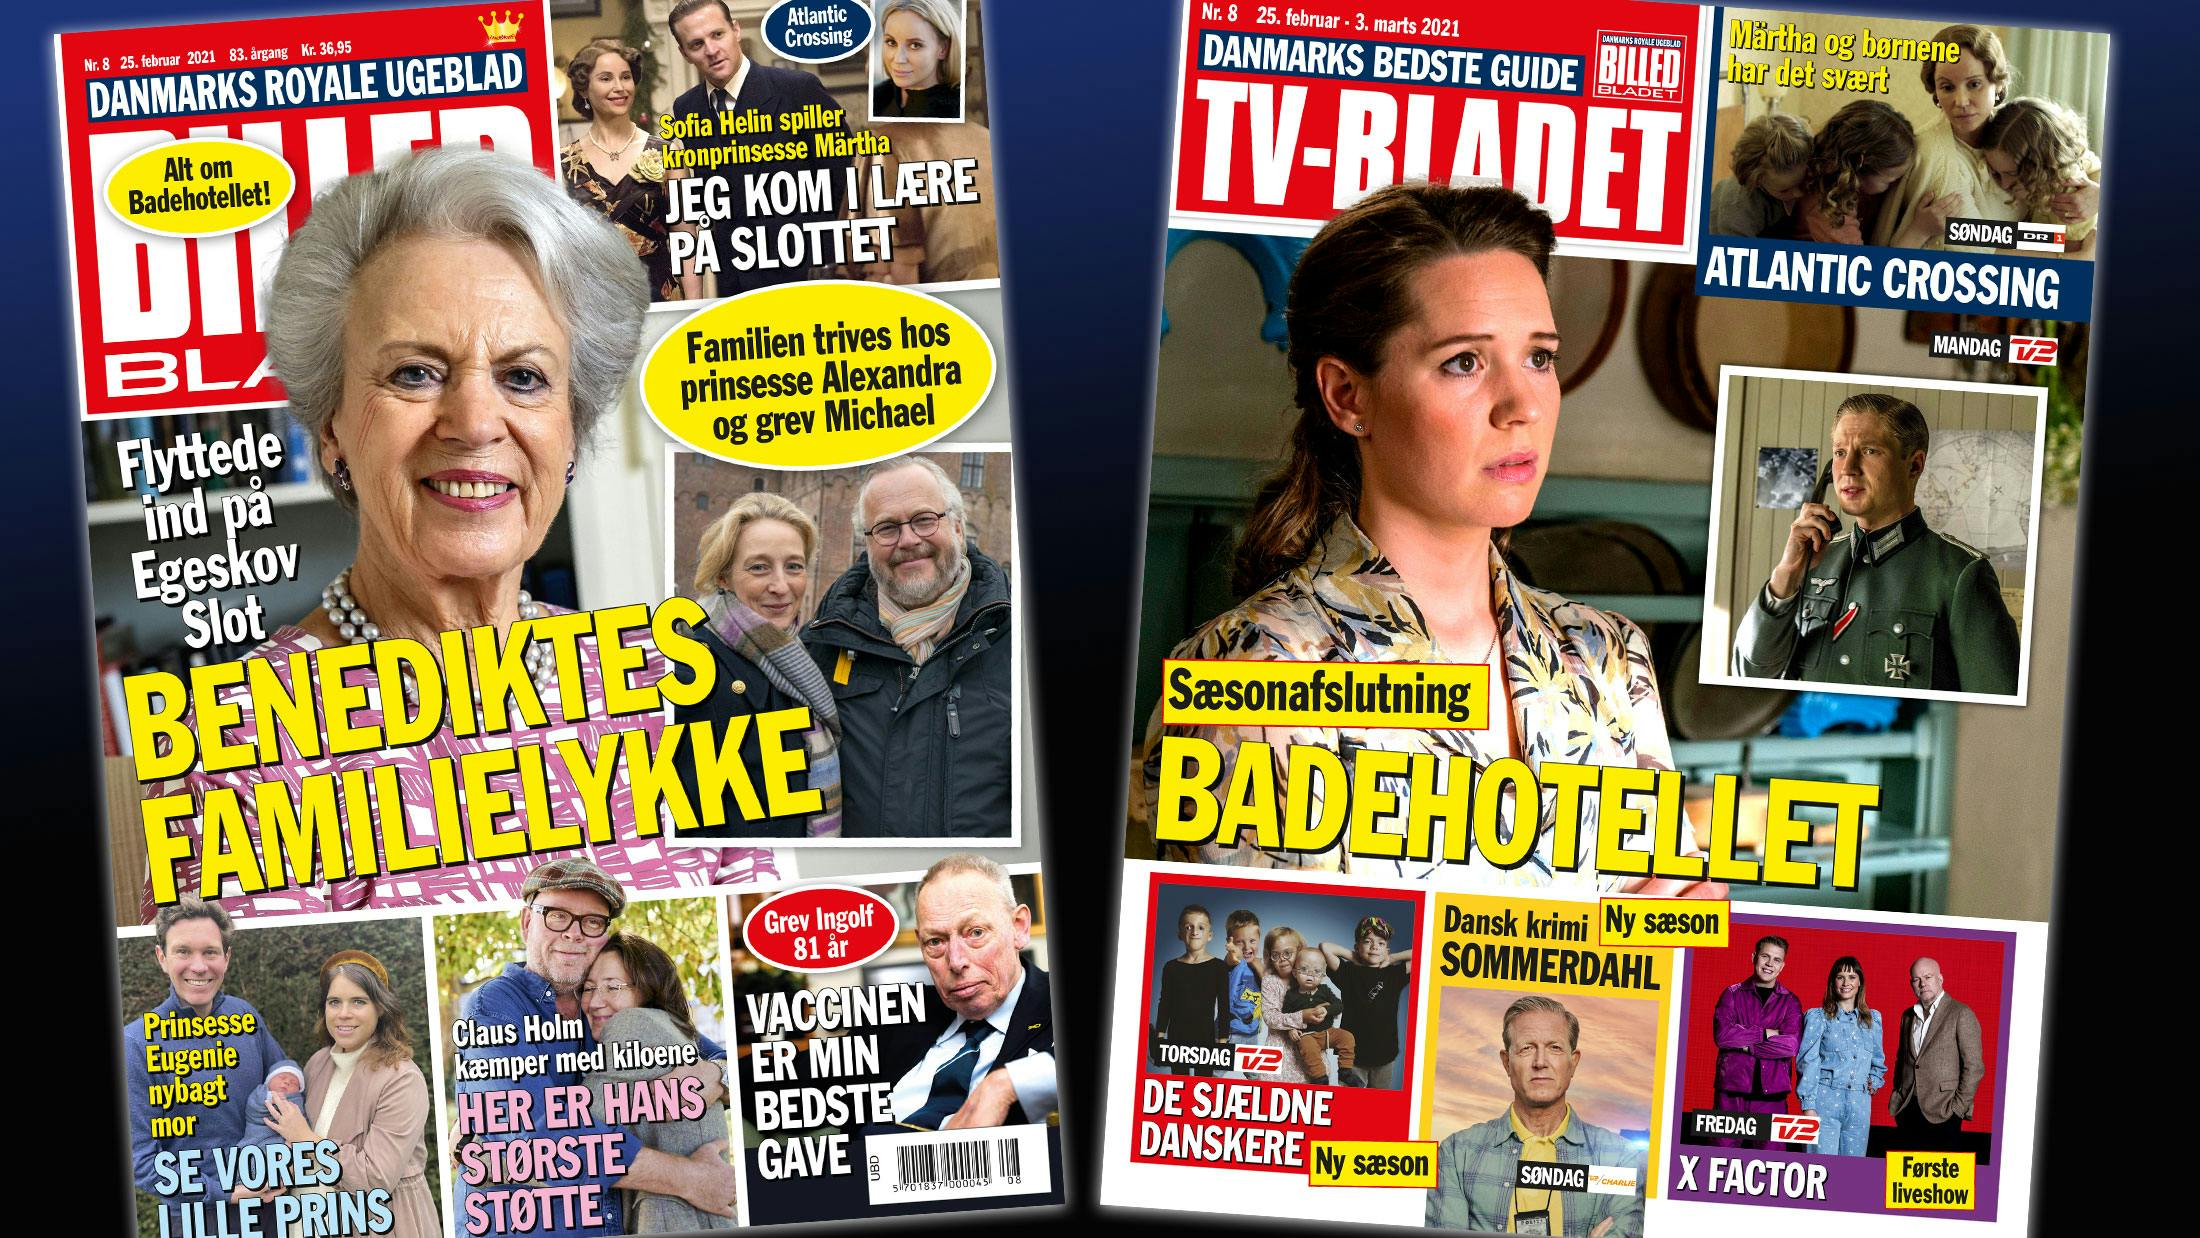 https://imgix.billedbladet.dk/media/article/webgrafik_bb08-forsider.jpg